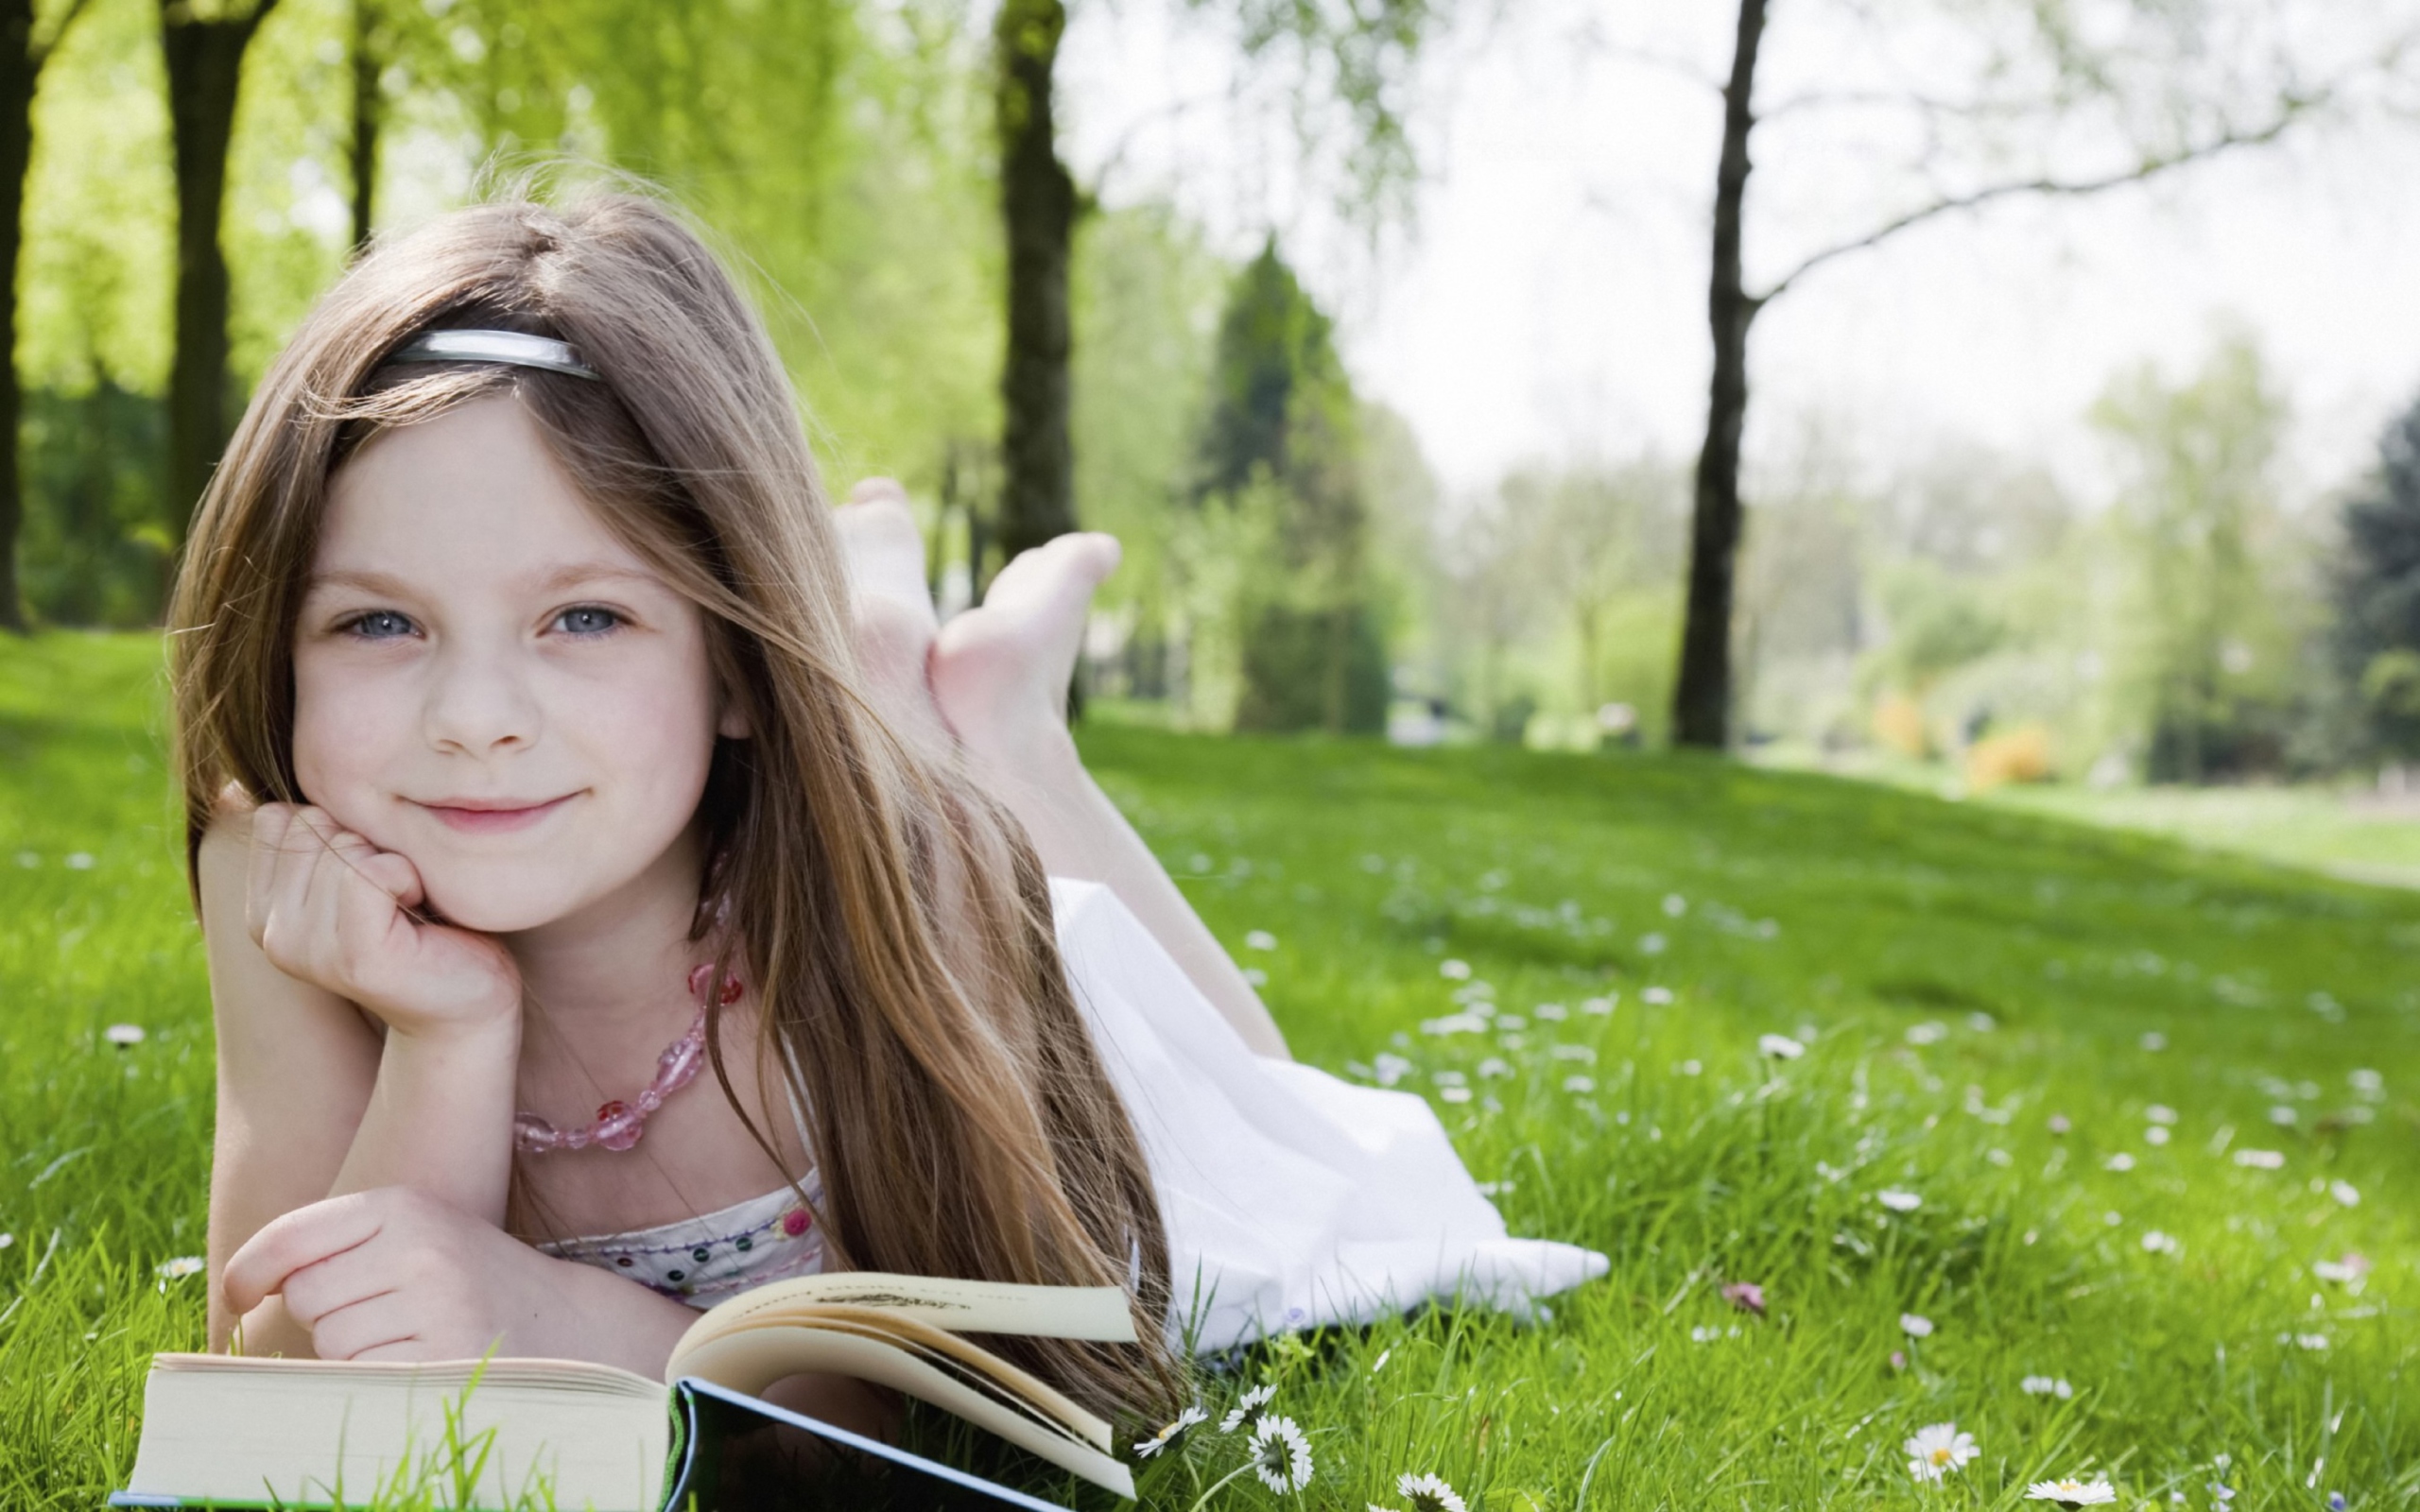 Картинка Cute Little Girl Reading Book In Garden на телефон 2560x1600.